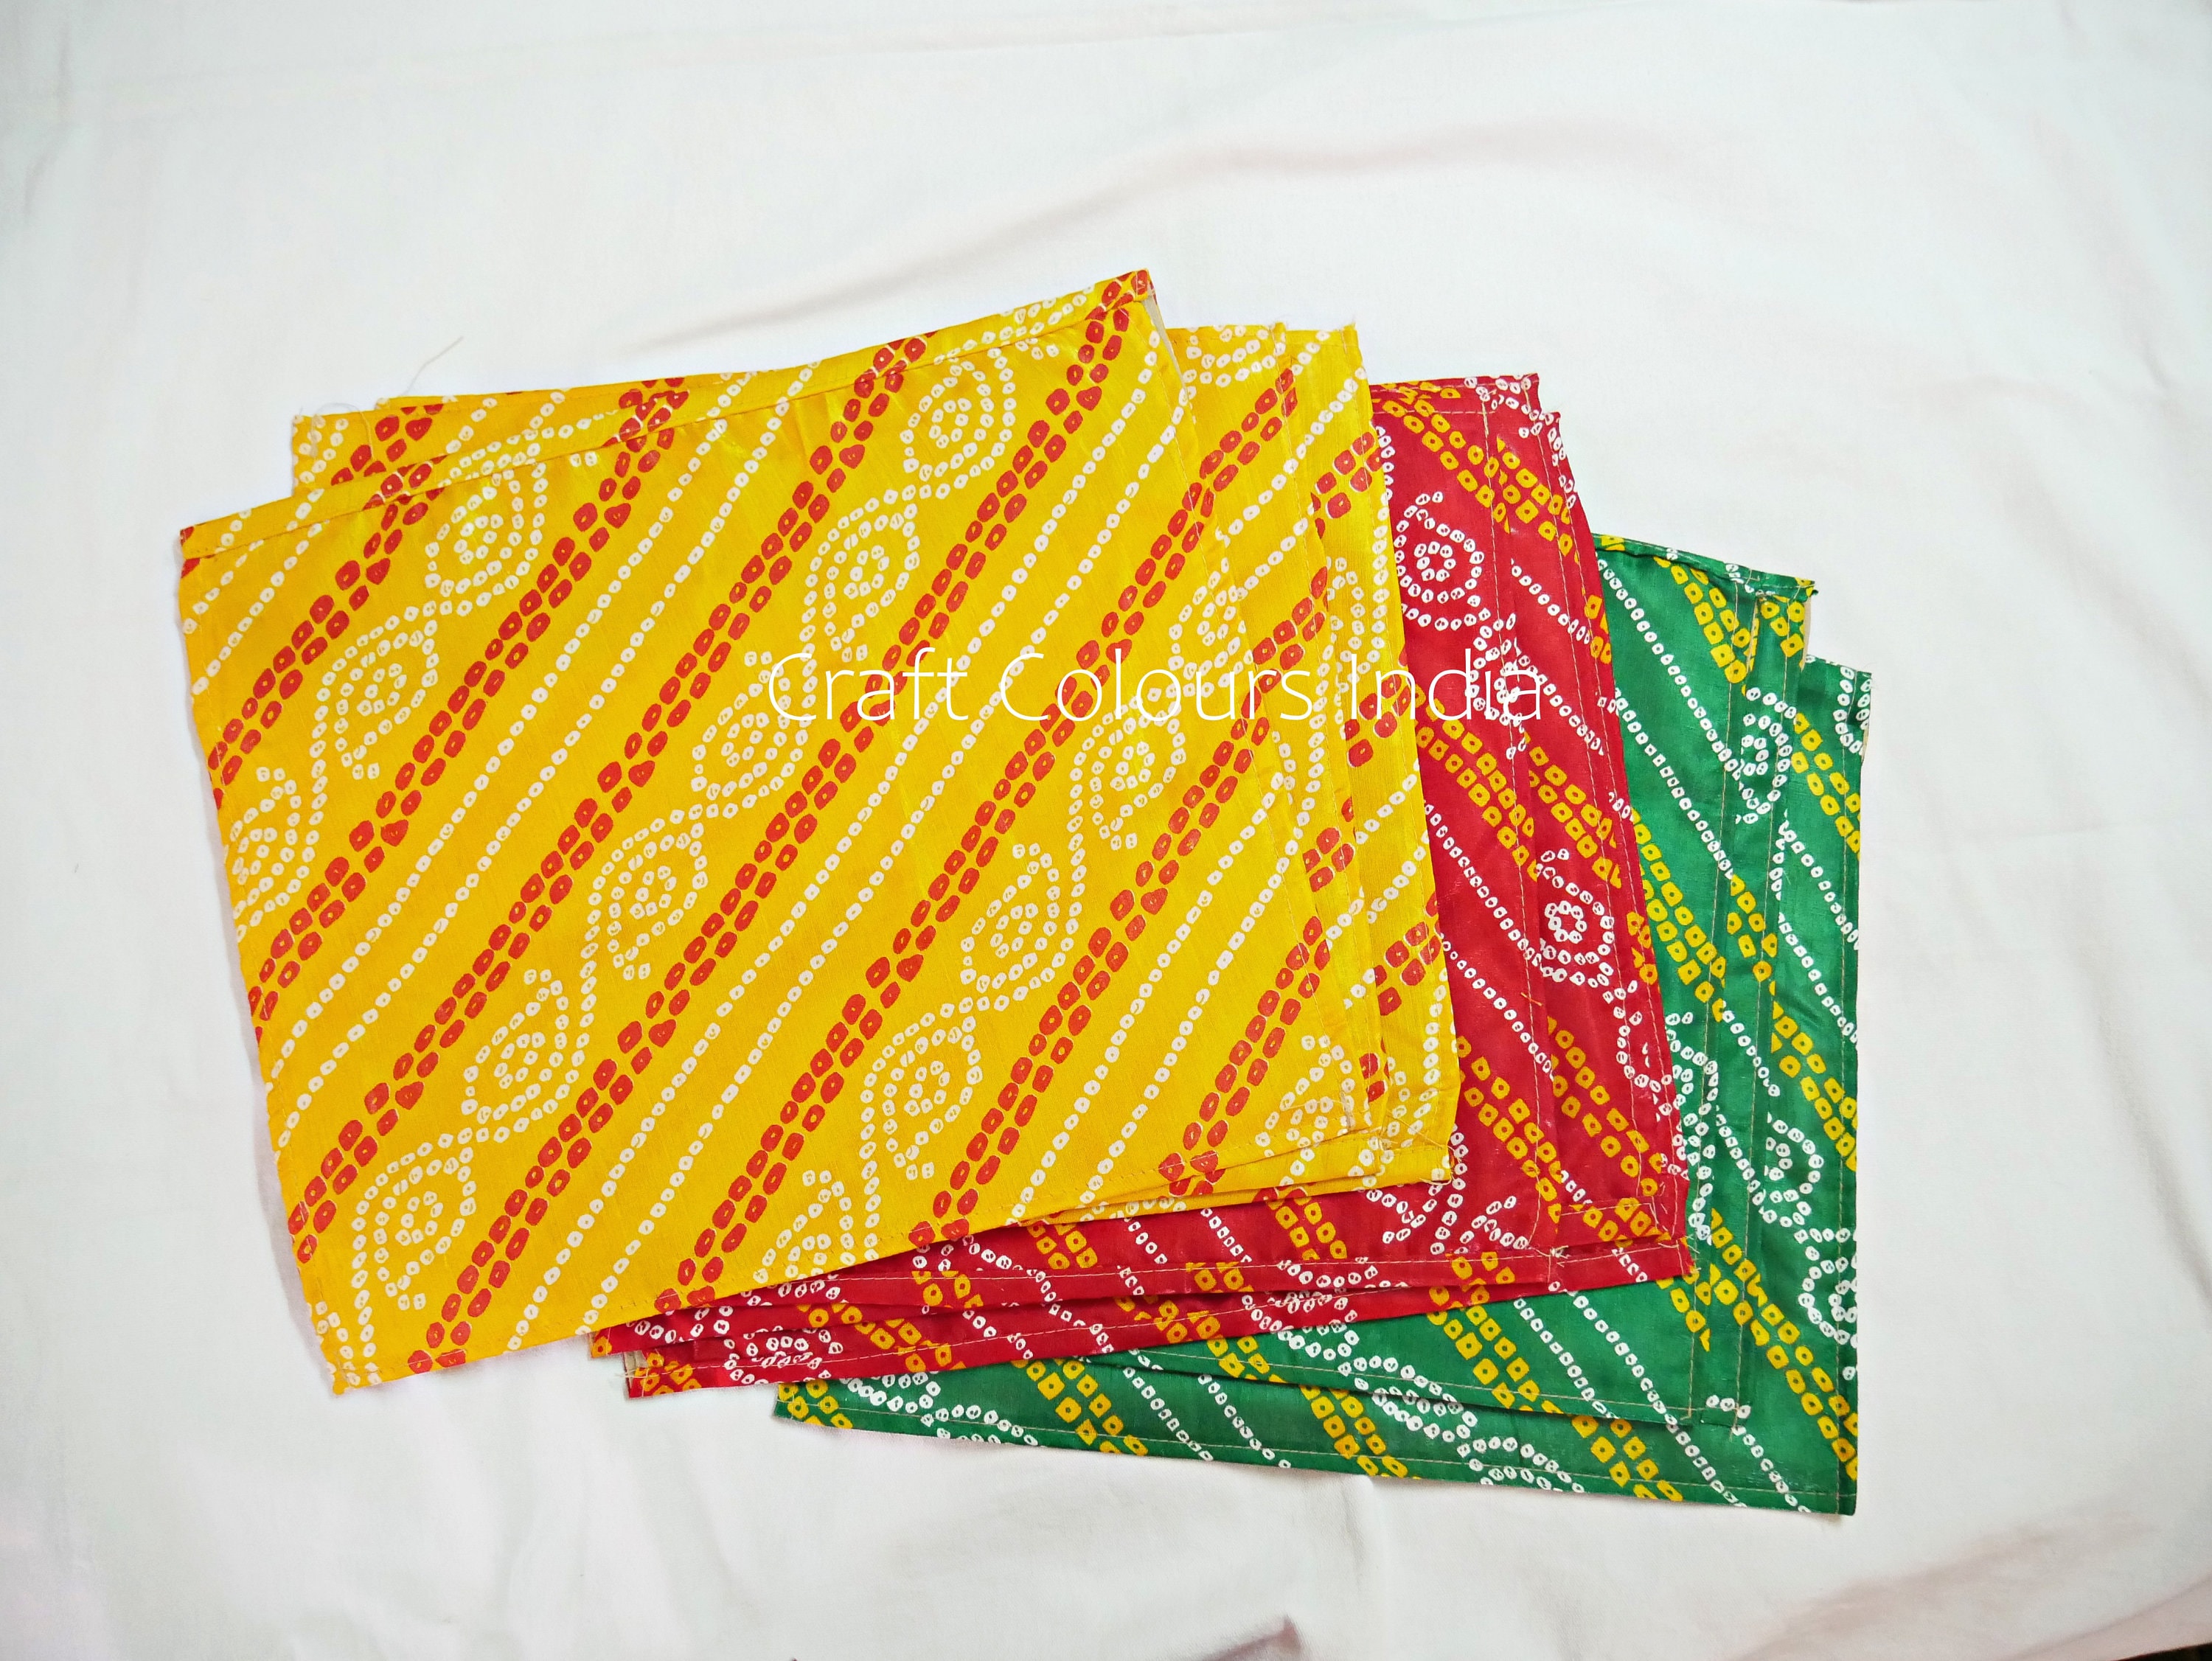 TARAgram Handmade Bandhani Design Canvas Red Tote Bag